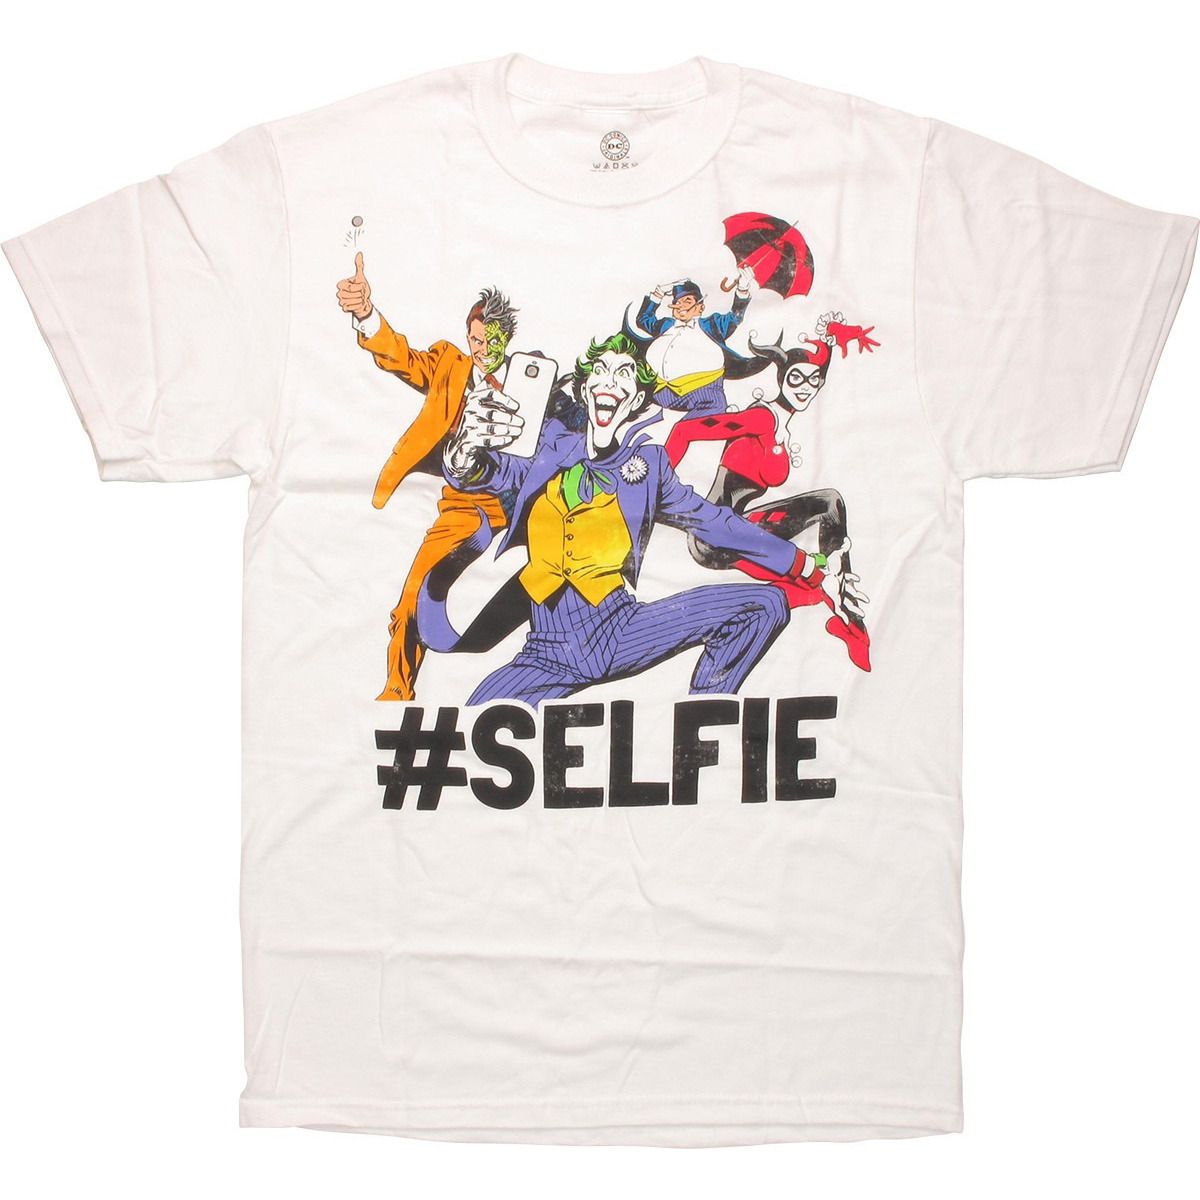  Joker Selfie Shirt Uncanny!